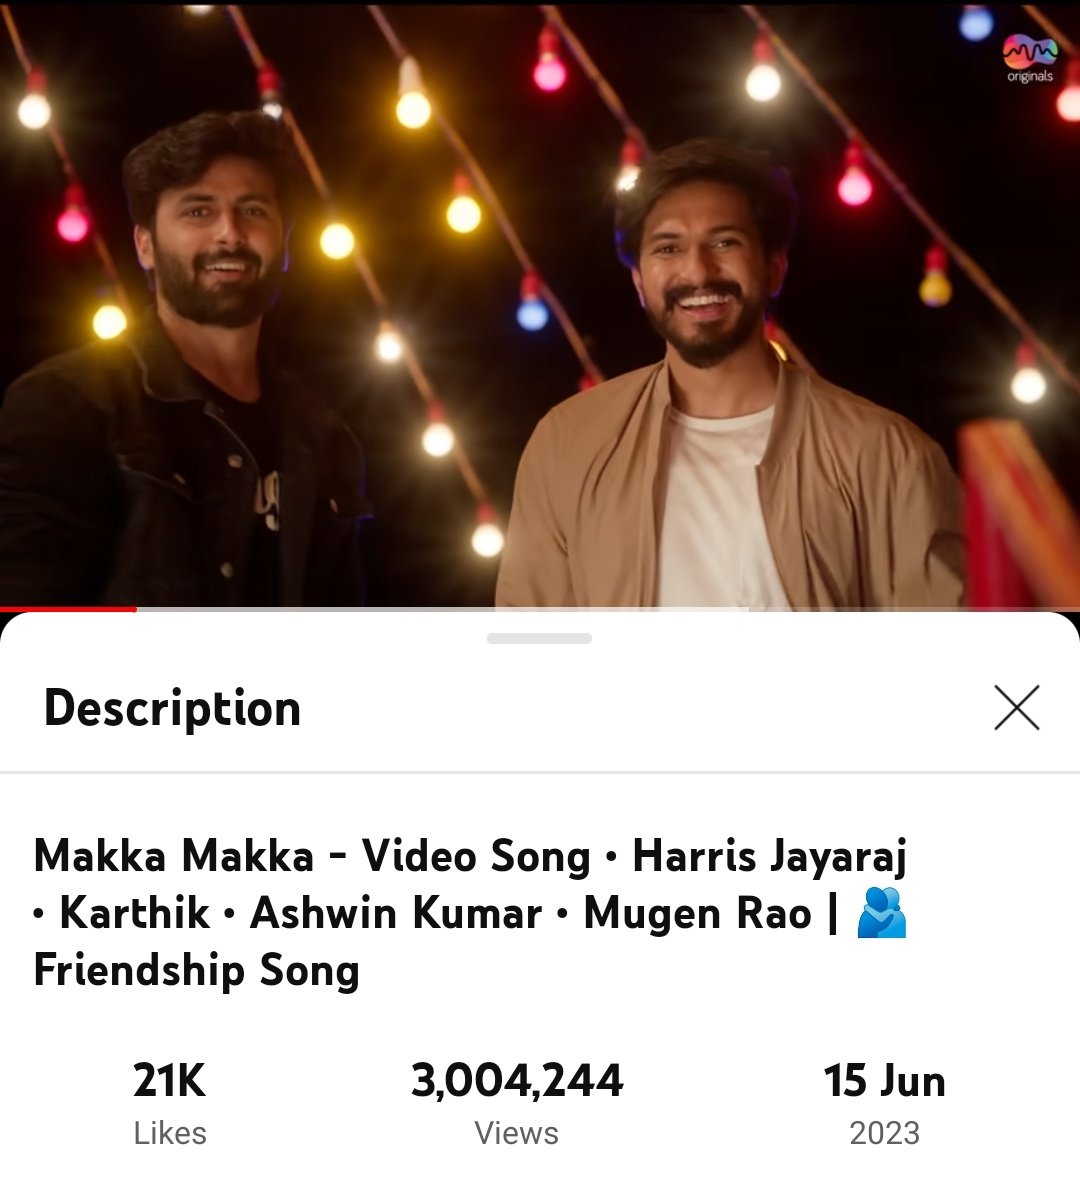 #makkamakka hits 3 million views
Congrats team ❤💃🏼🎉
#ashwinkumar